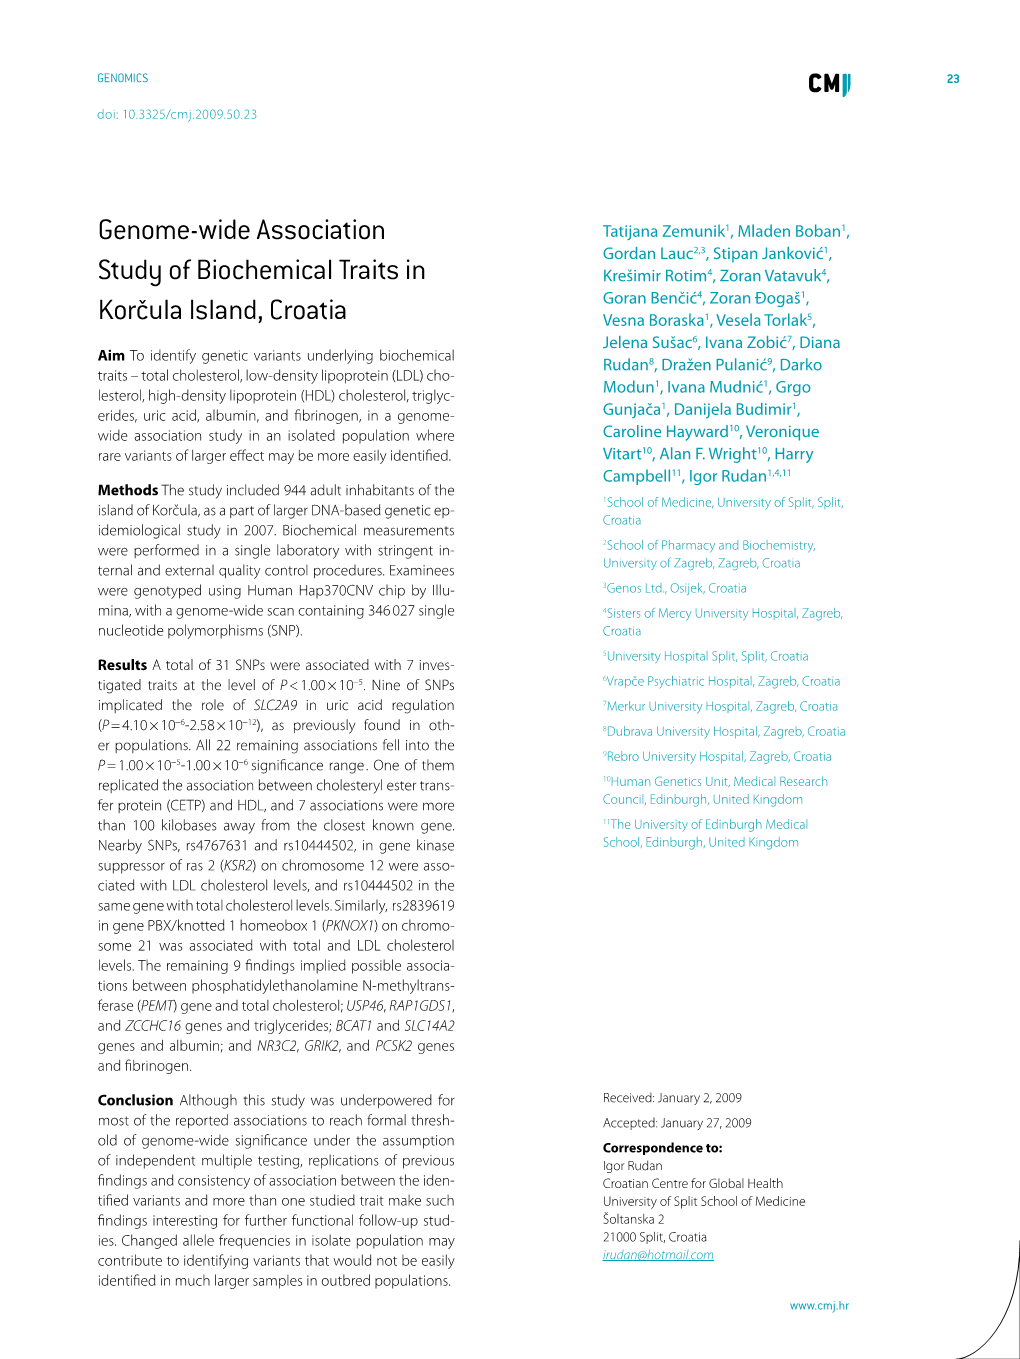 Genome-Wide Association Study of Biochemical Traits in Korčula Island